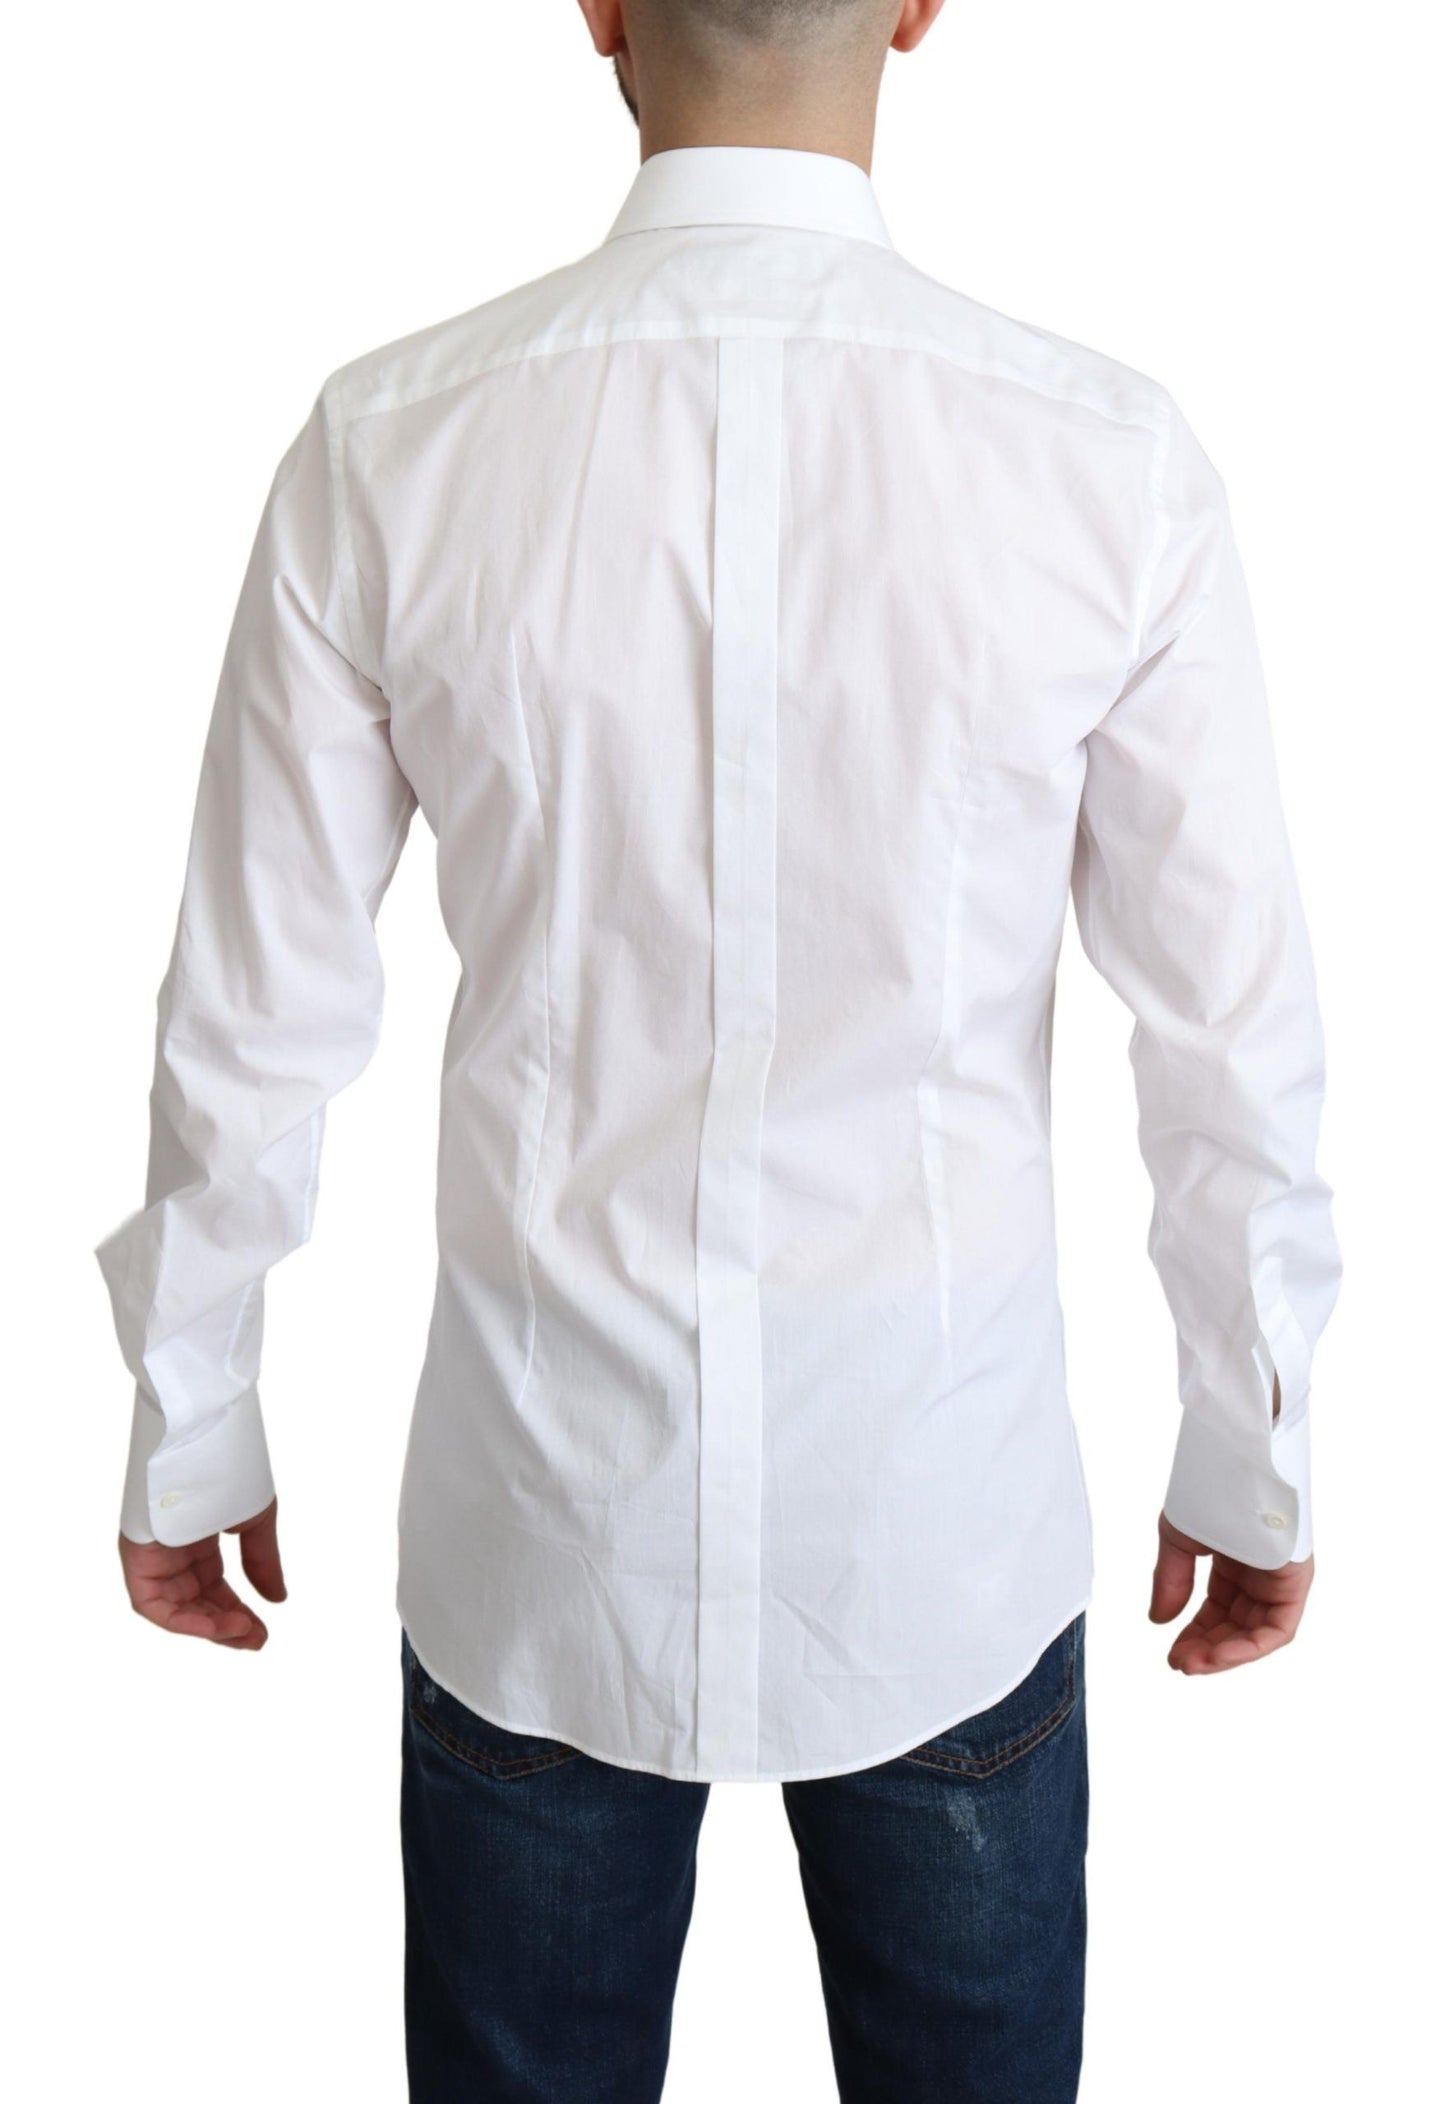 Dolce & Gabbana Elegant White Cotton Bib Dress Shirt